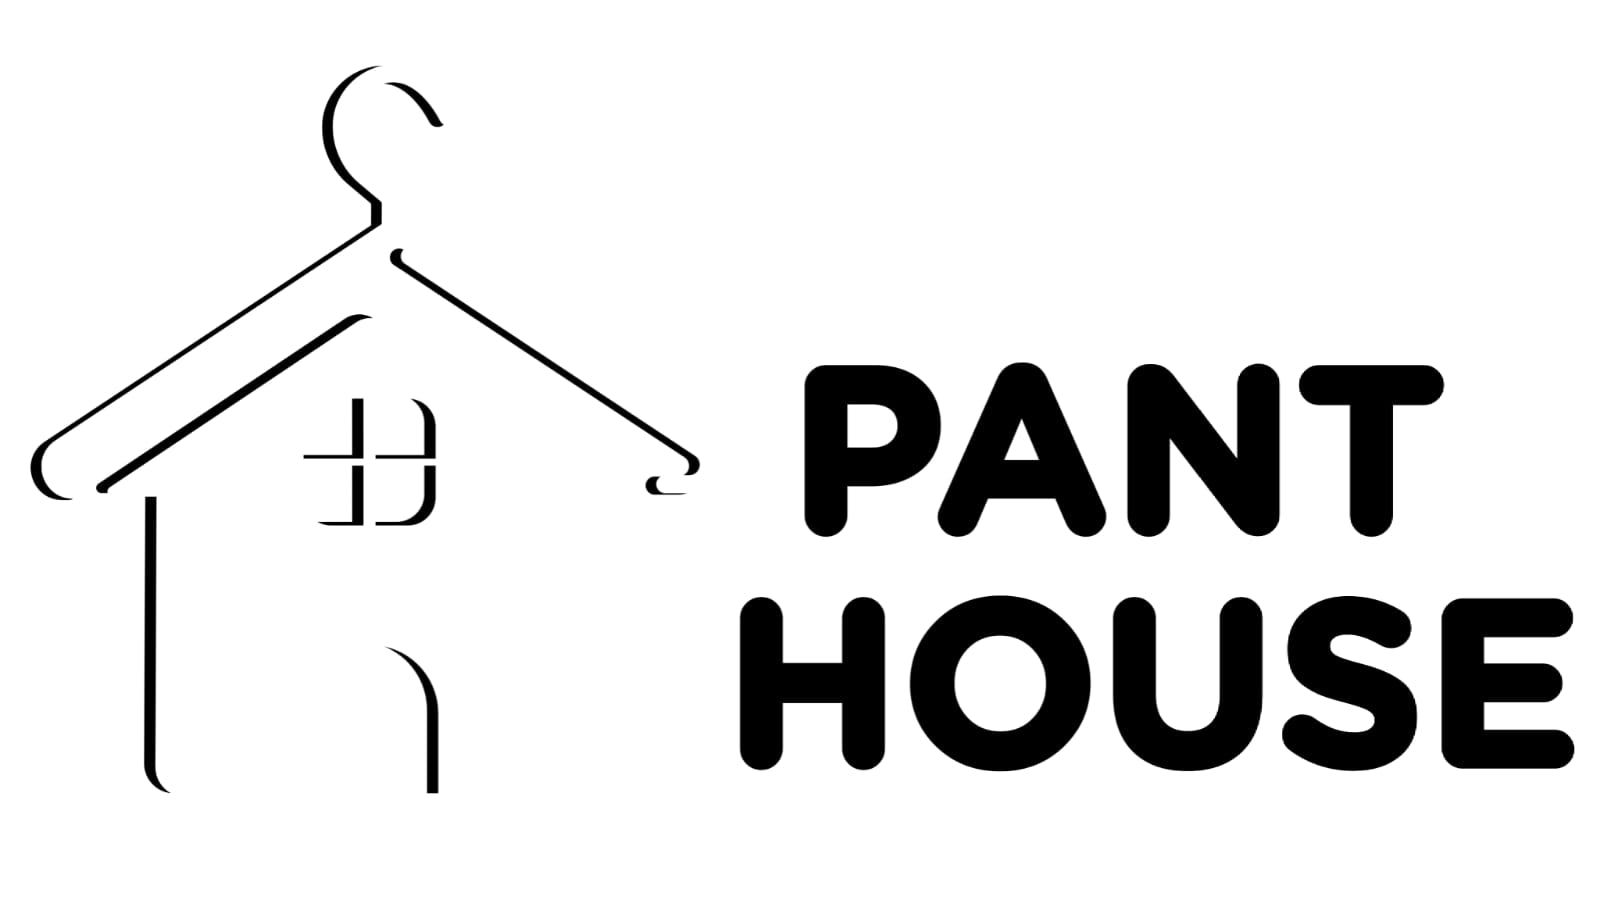 PANT HOUSE